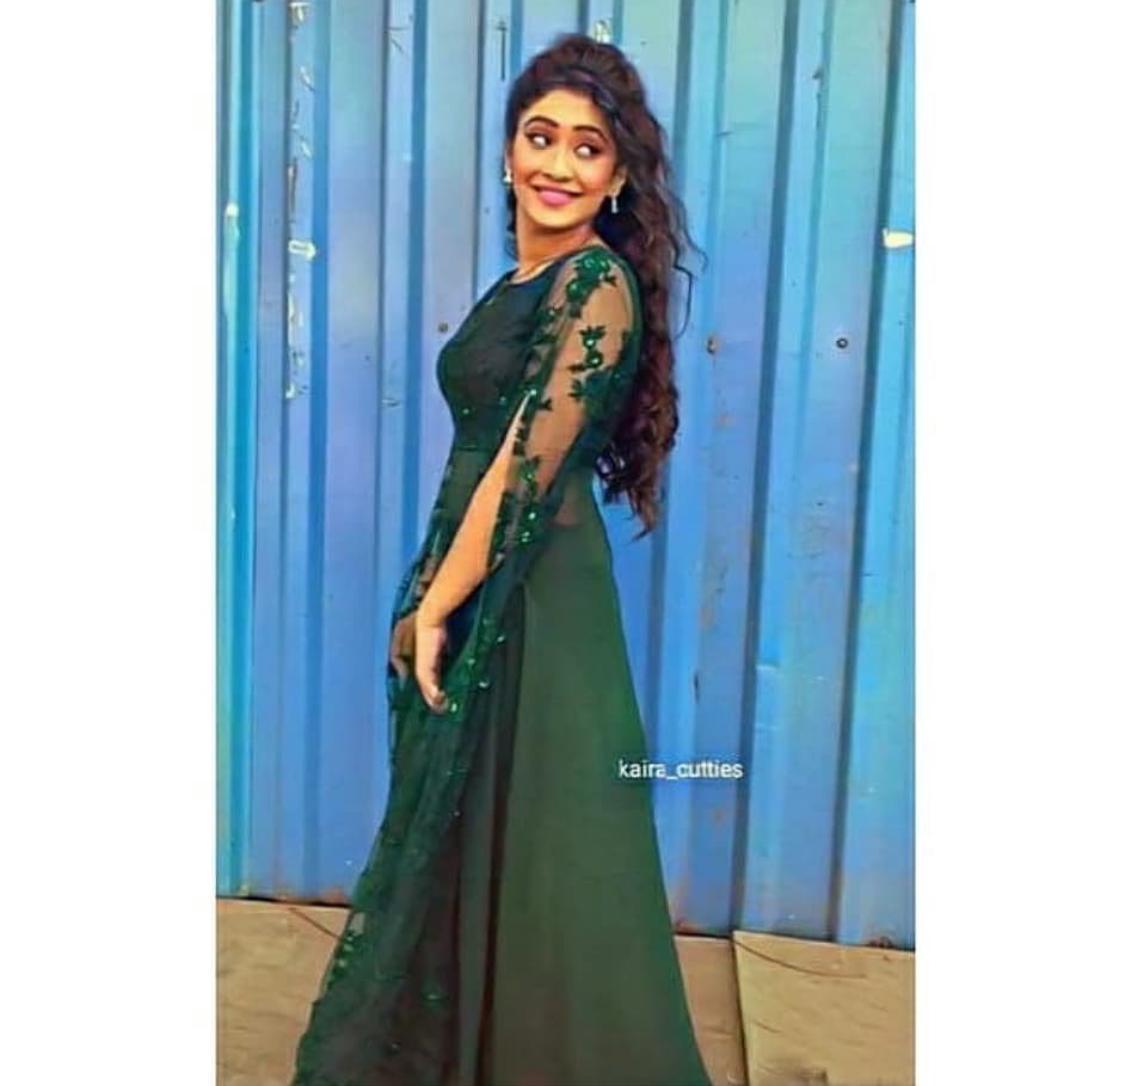 Nari | Shivangi Joshi looks pretty in blue short dress #shivangijoshi  #bluedress #bollywood #tvstar | Instagram